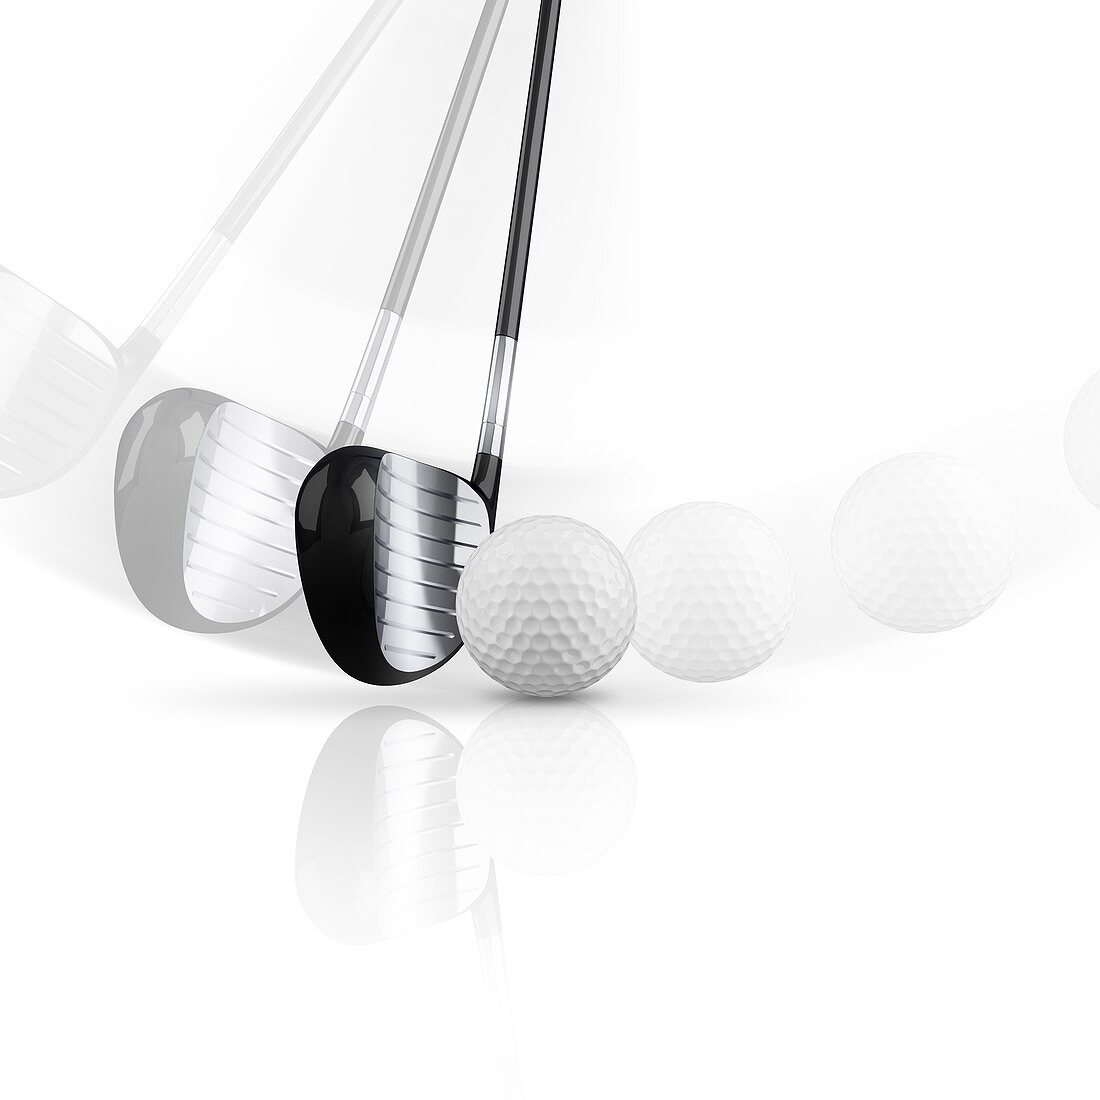 Golf club with golf ball, illustration